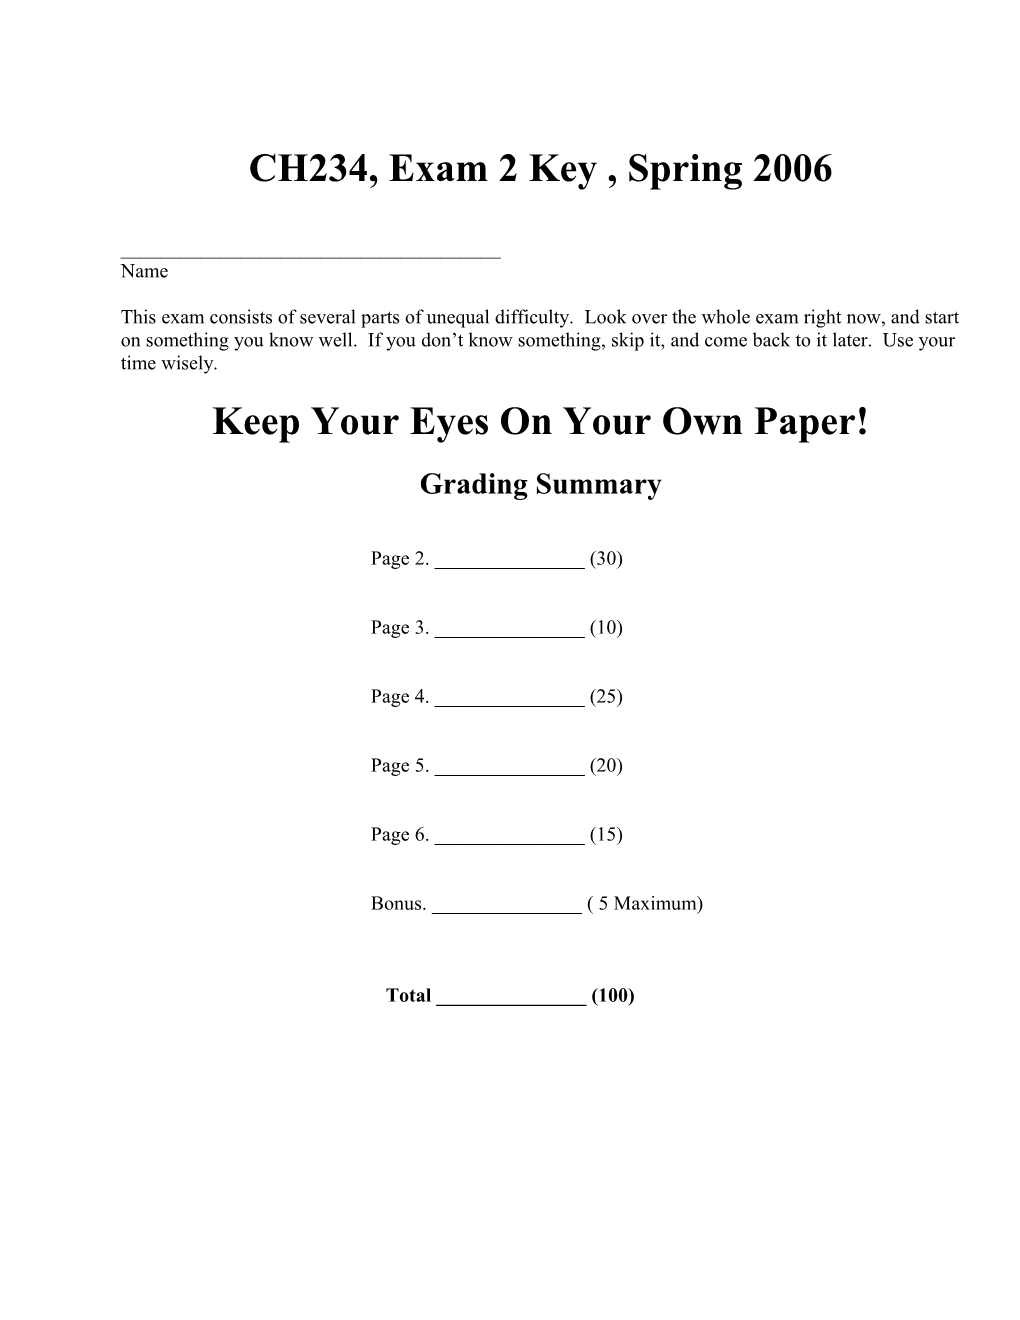 CH234, Exam 2 Key, Spring 2006